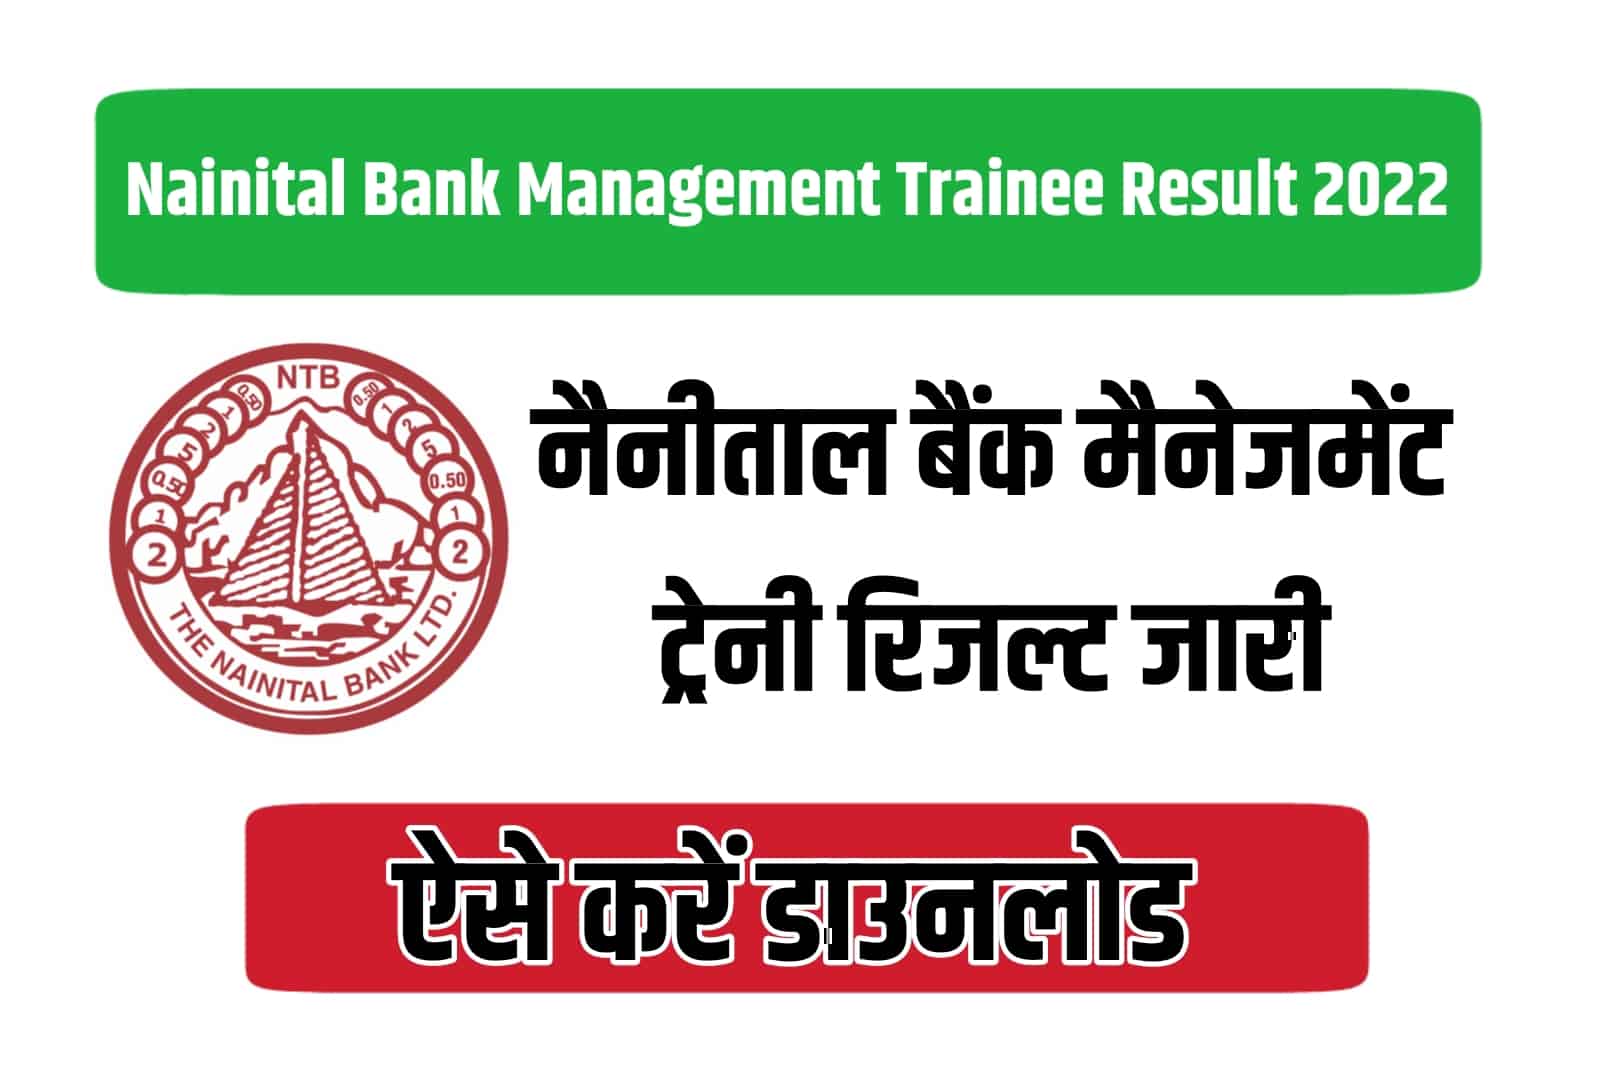 Nainital Bank Management Trainee Result 2022 | नैनीताल बैंक मैनेजमेंट ट्रेनी रिजल्ट 2022